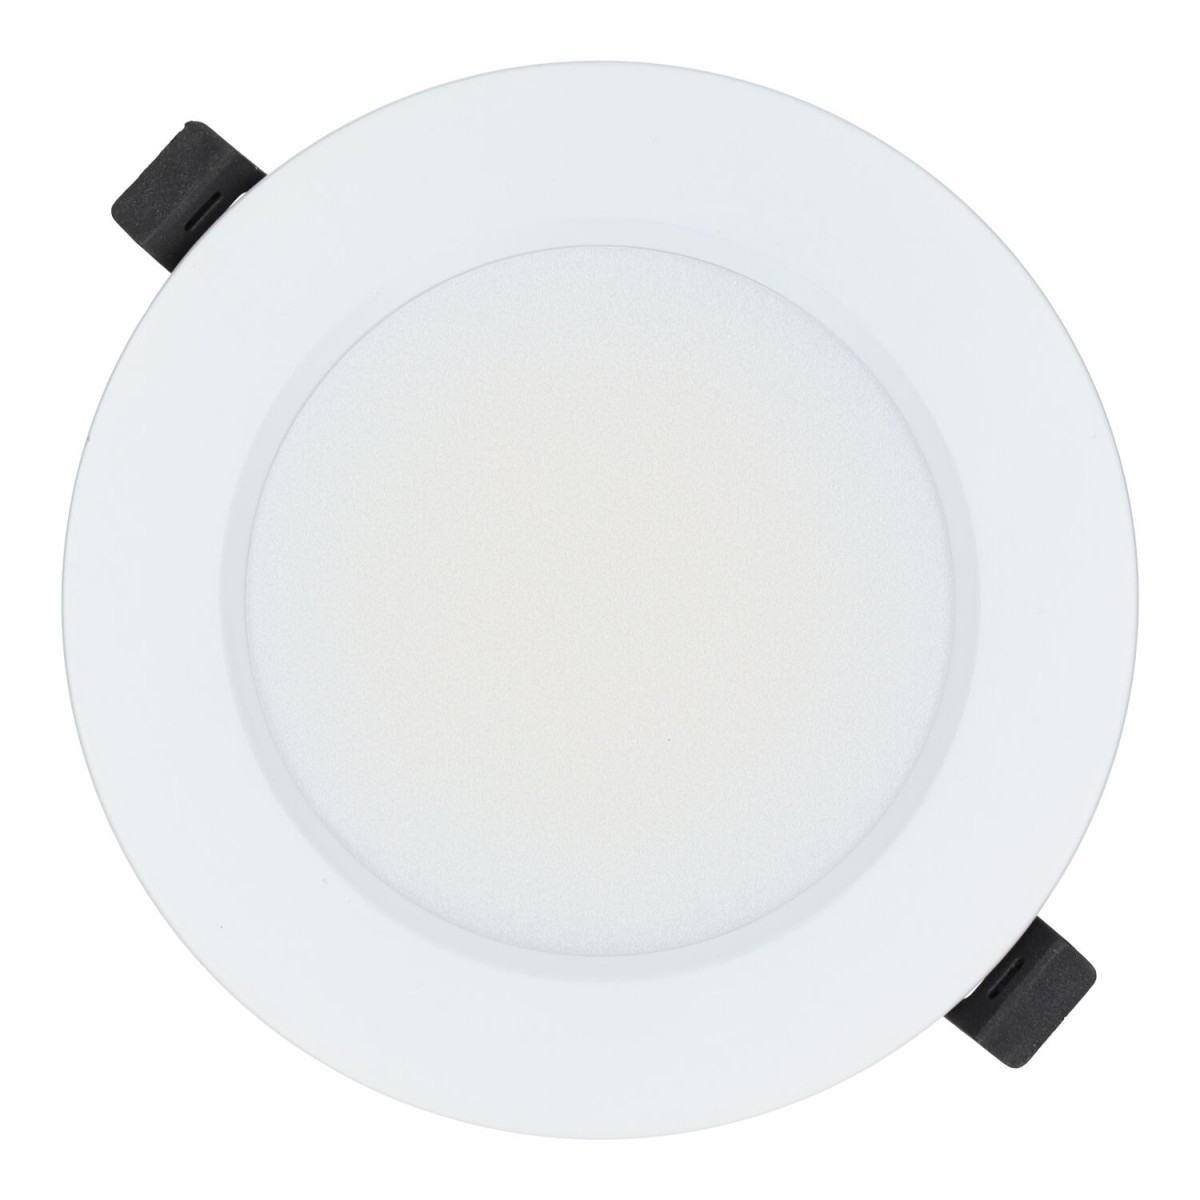 LED Downlight - White, 12W